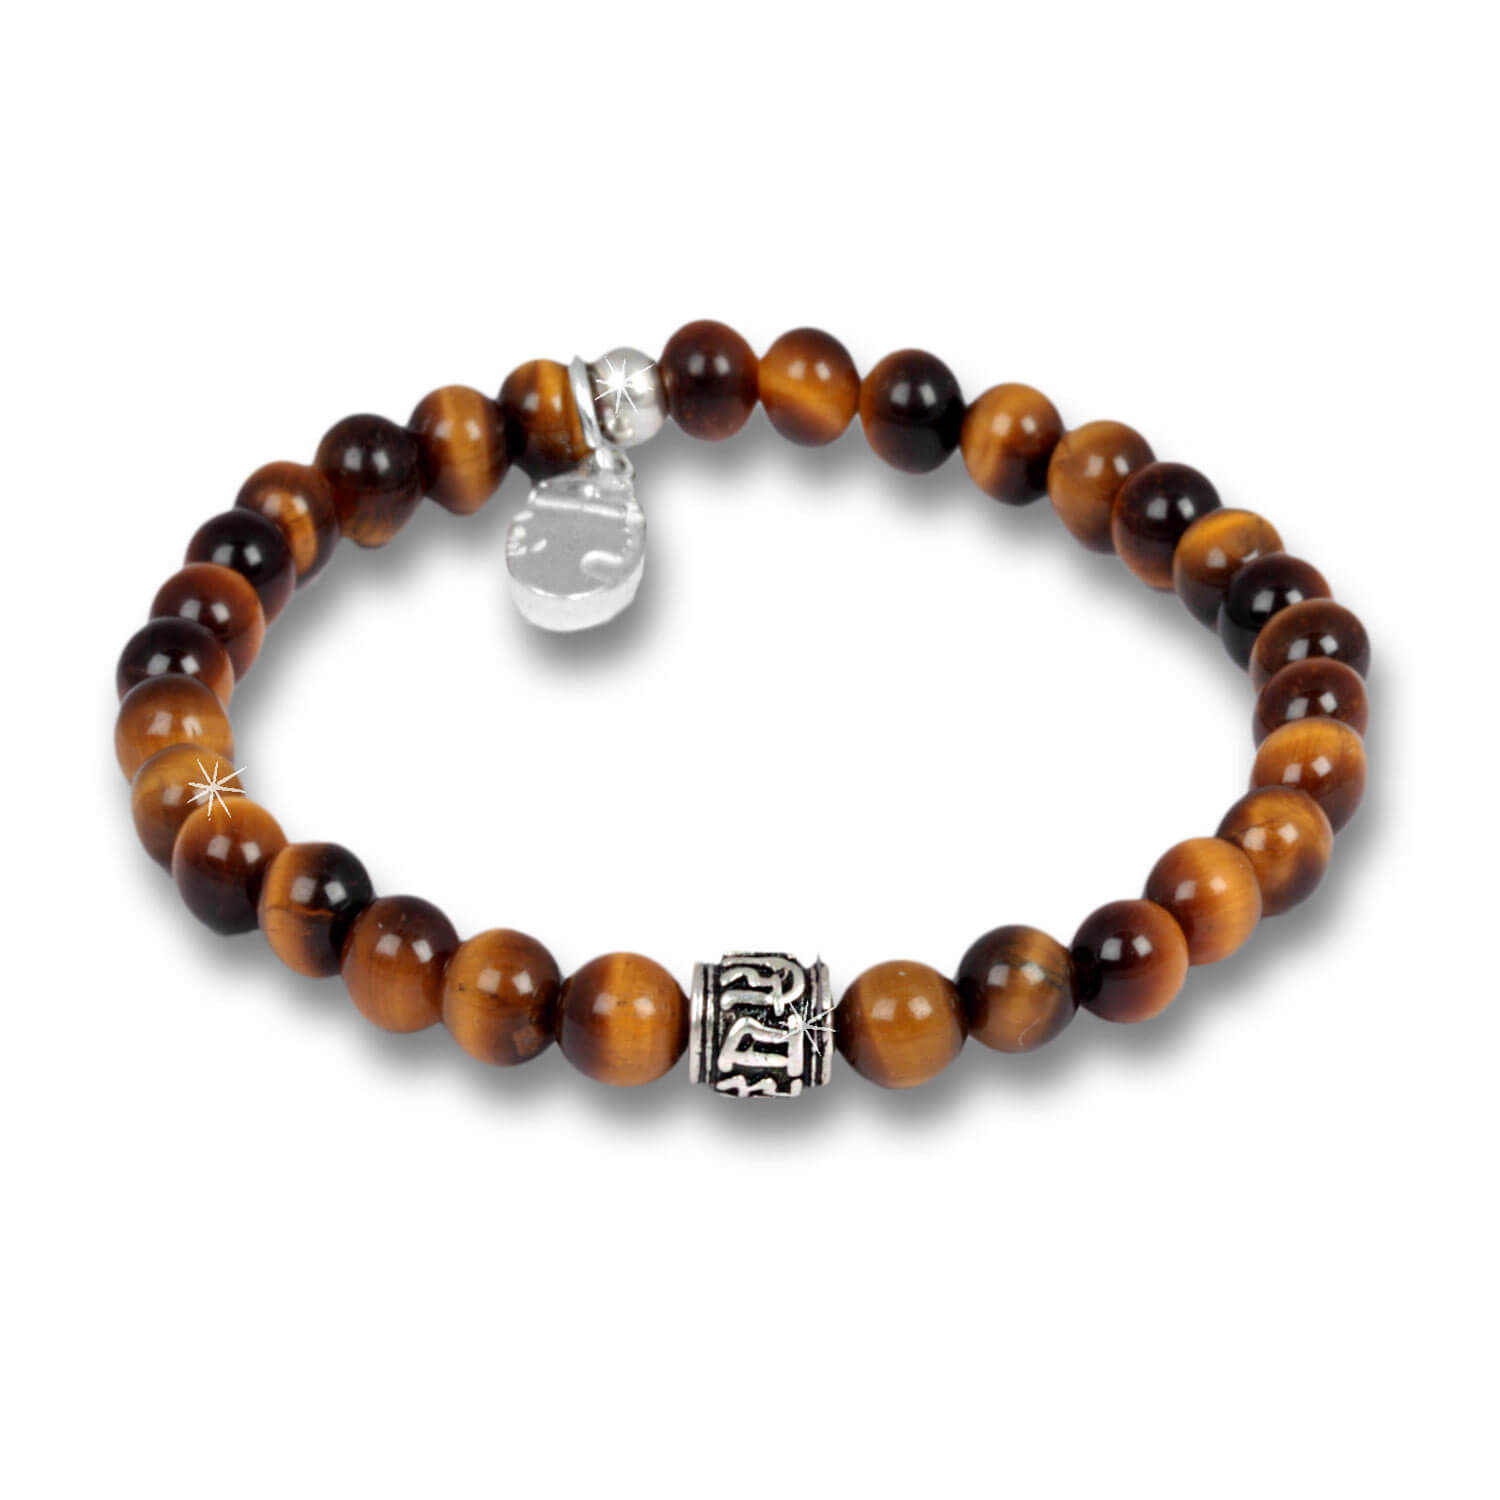 Little Tigereye - Mantra Beads gemstone bracelet for men with sterling silver, 6 mm